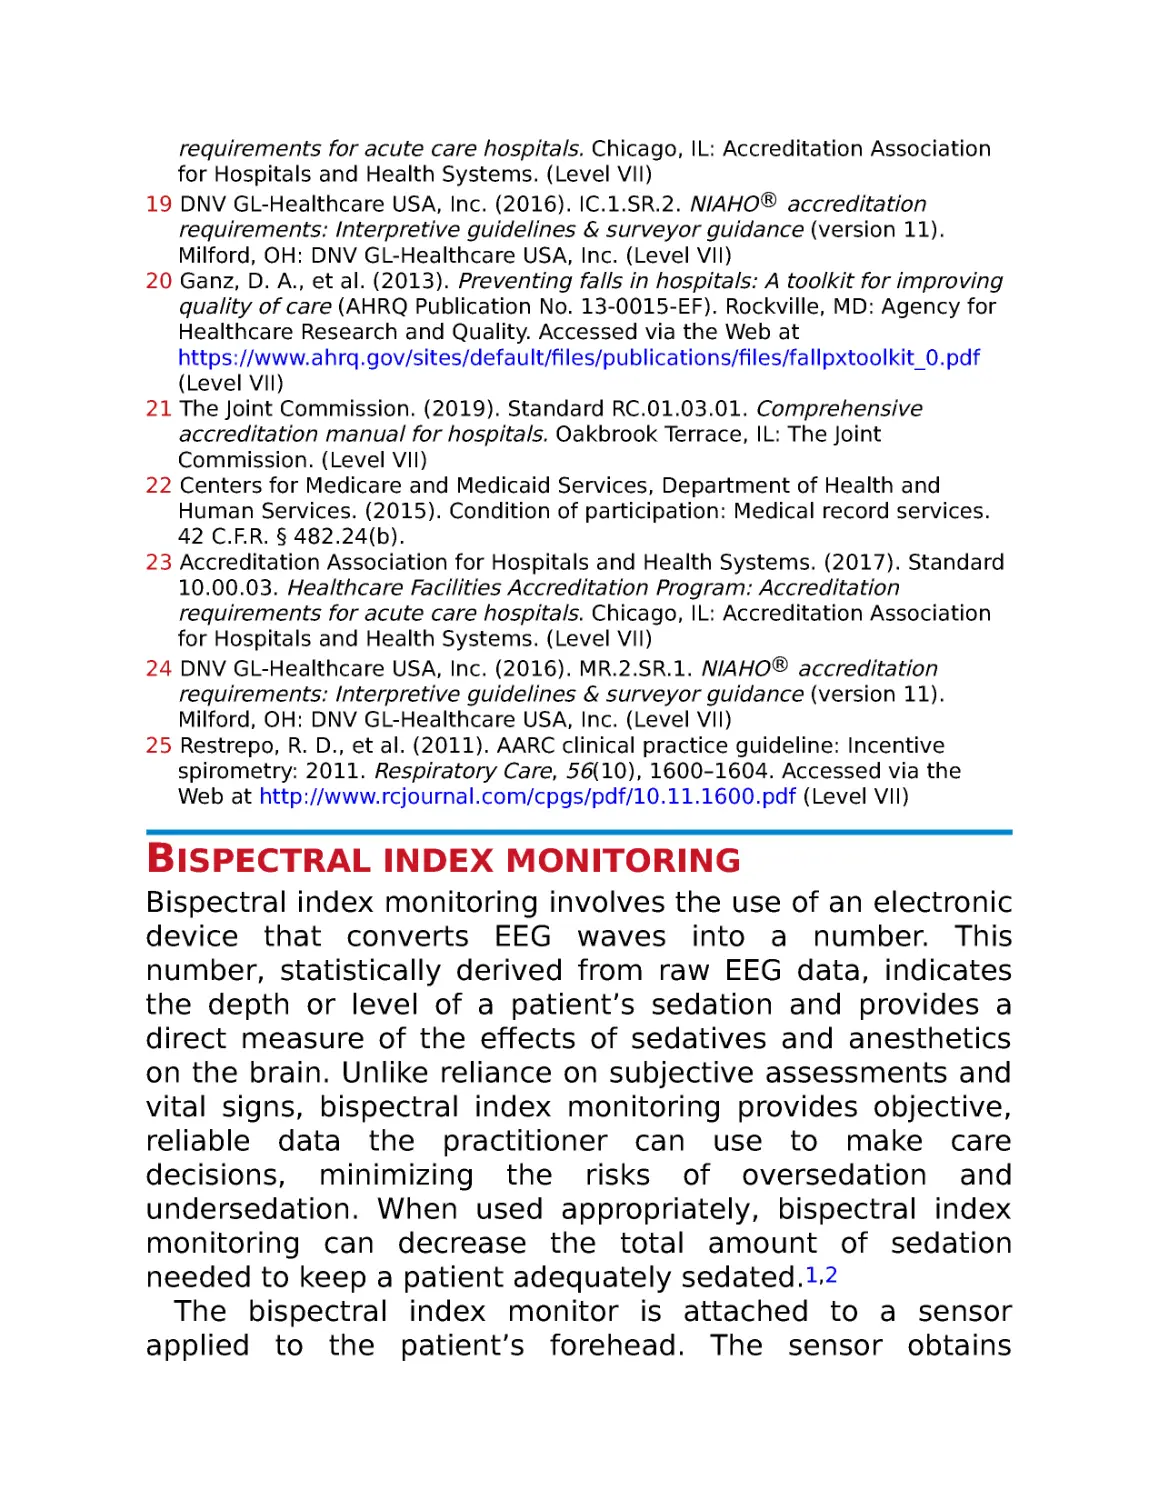 Bispectral index monitoring